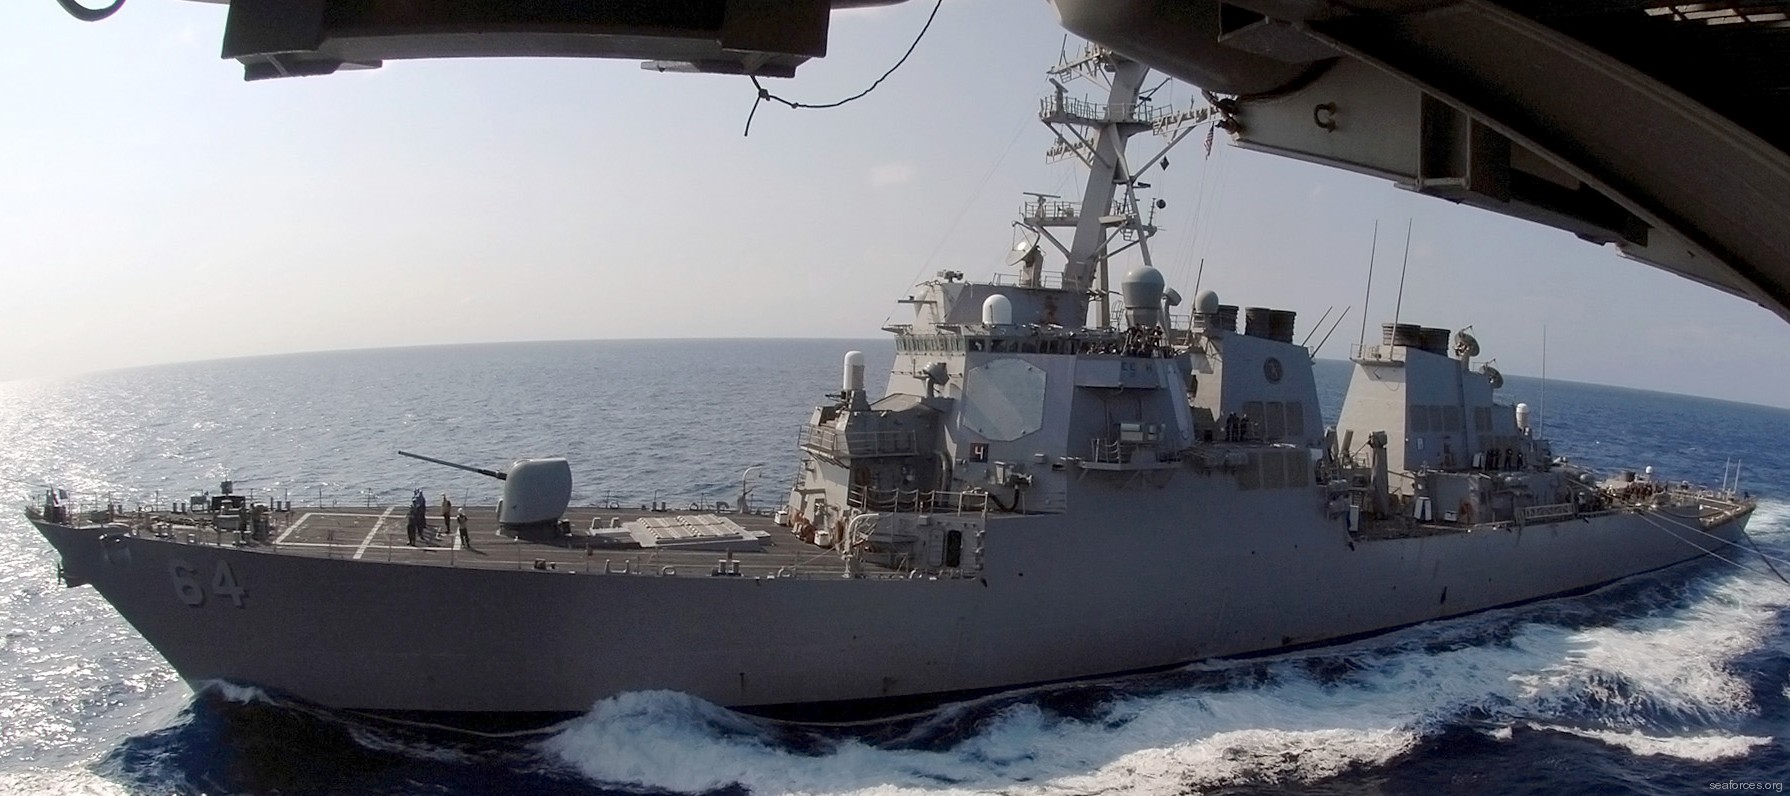 ddg-64 uss carney destroyer arleigh burke class navy 61